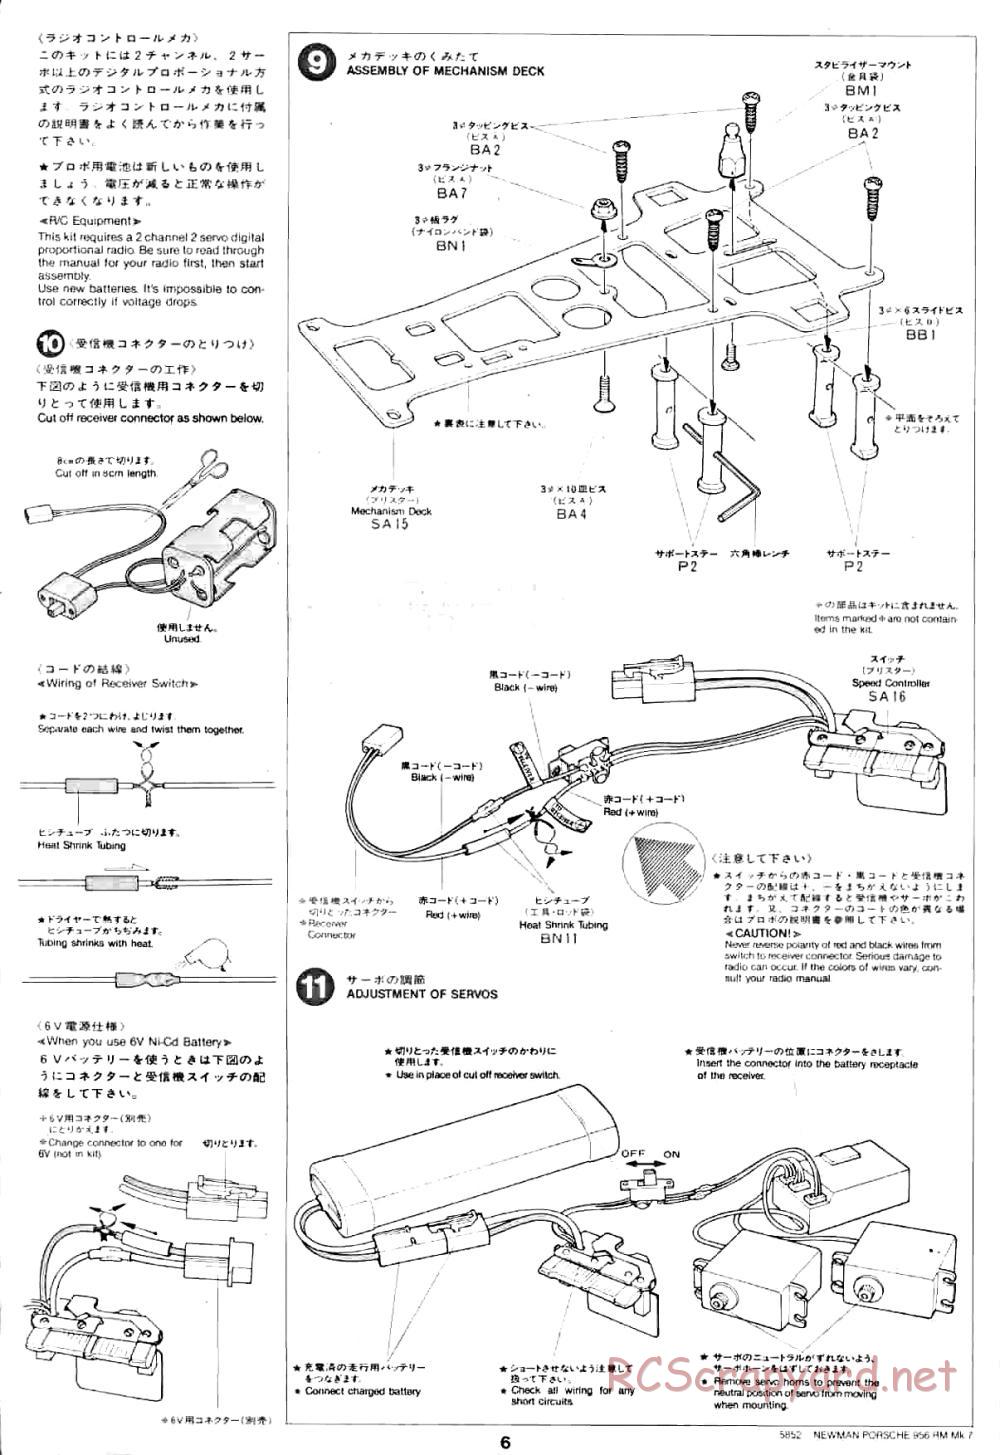 Tamiya - Newman Prsch 956 - RM MK.7 - 58052 - Manual - Page 6